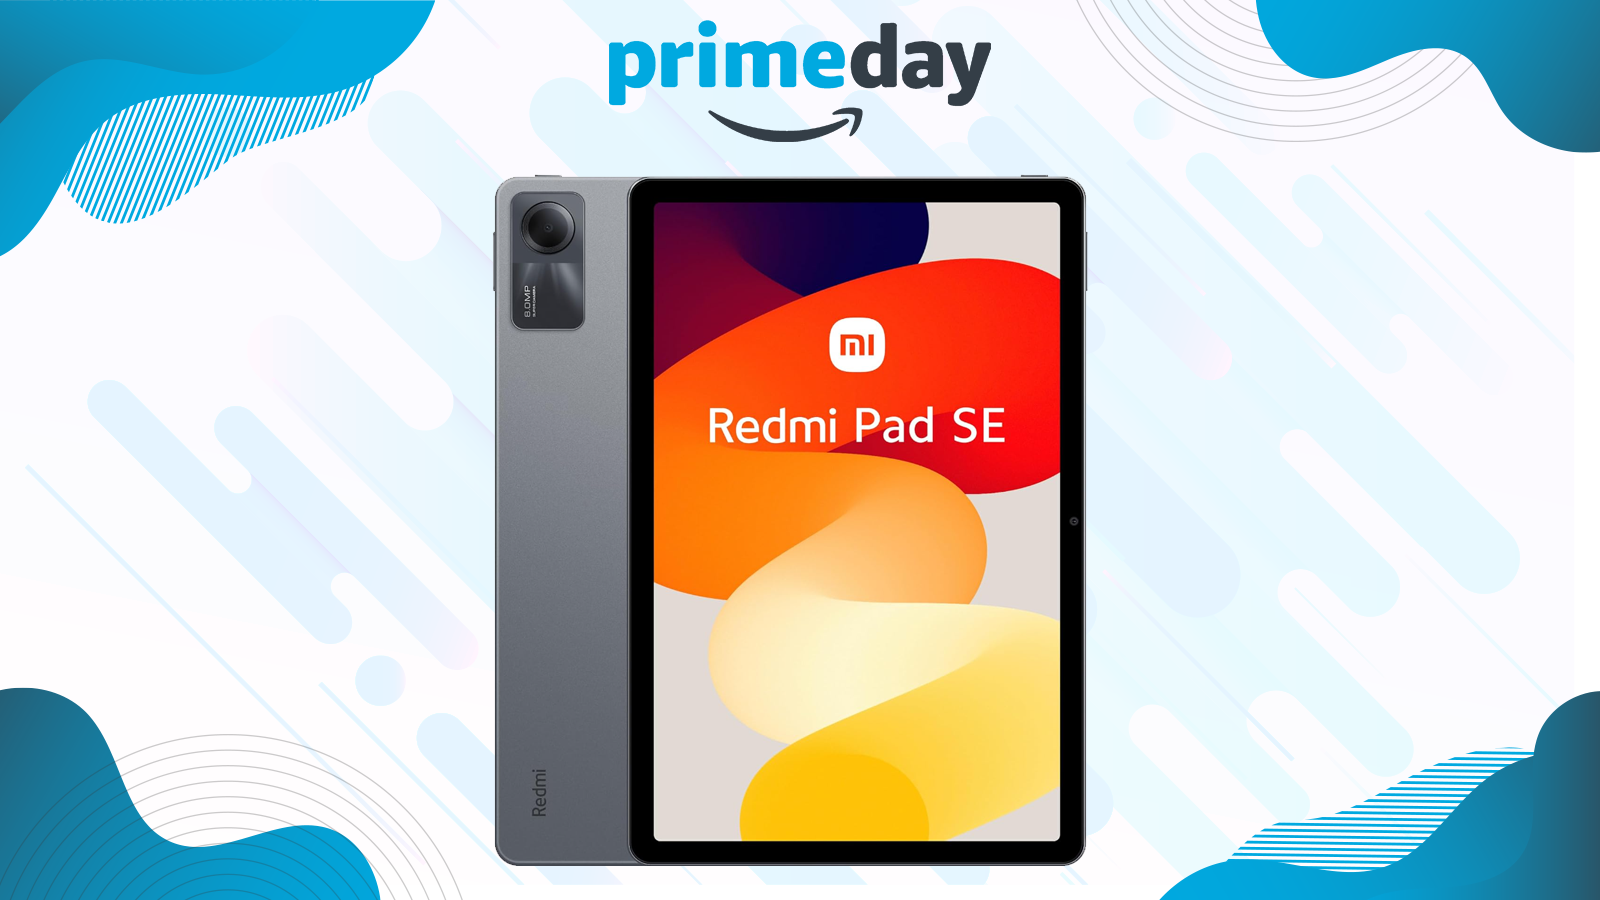 La tablette Xiaomi Redmi Pad SE chute de prix pour le Prime Day